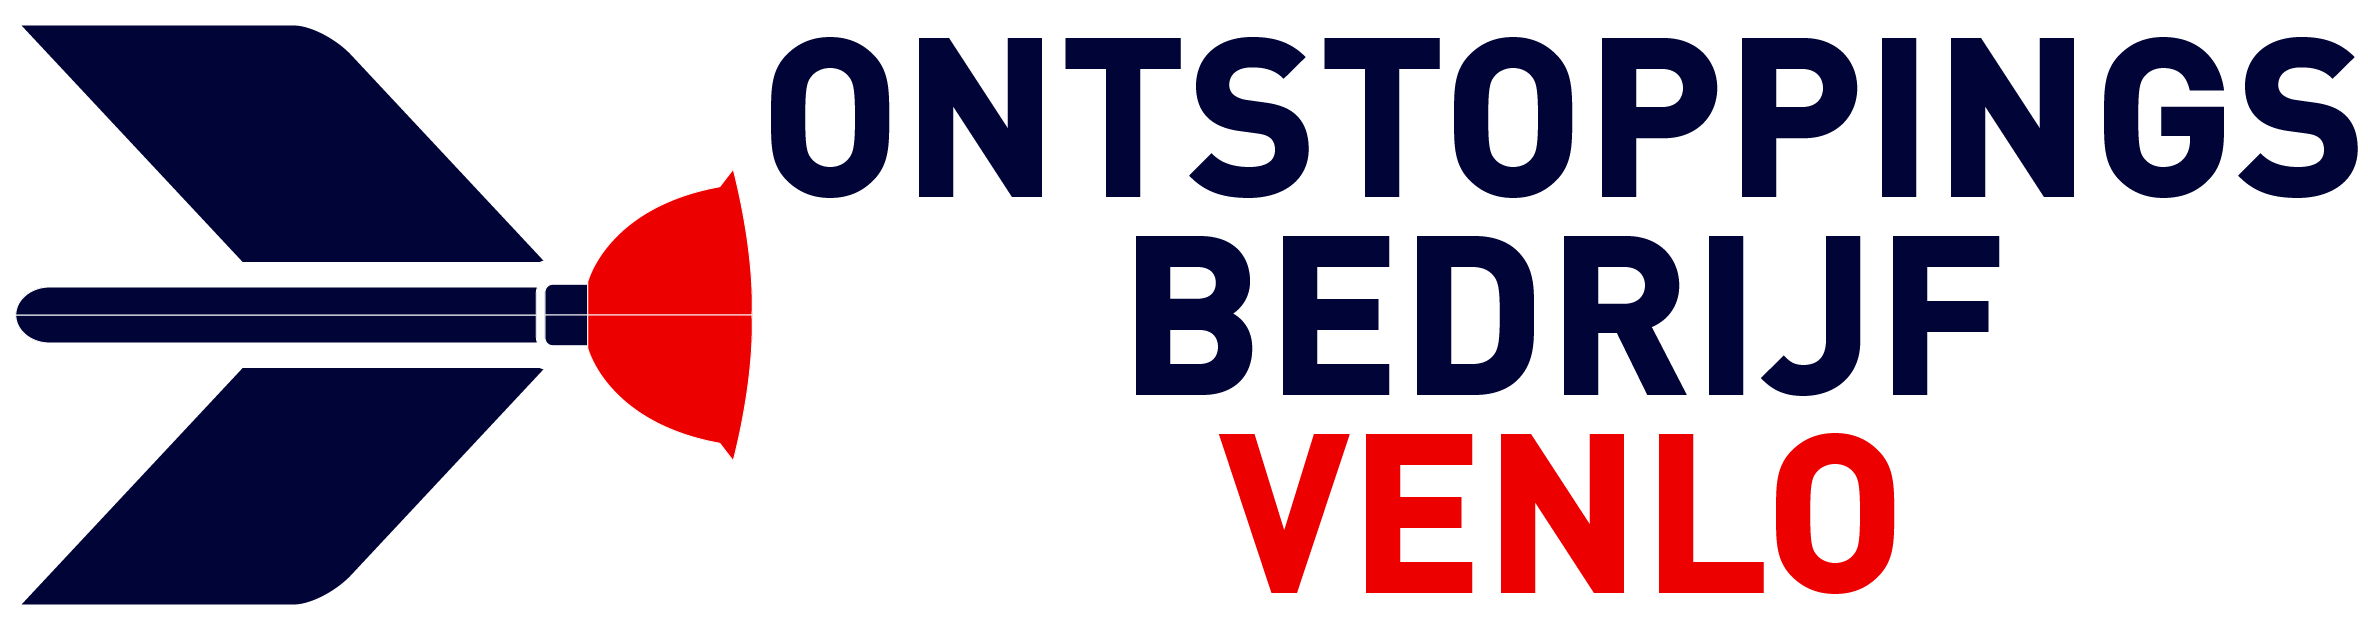 Ontstoppingsbedrijf Venlo logo